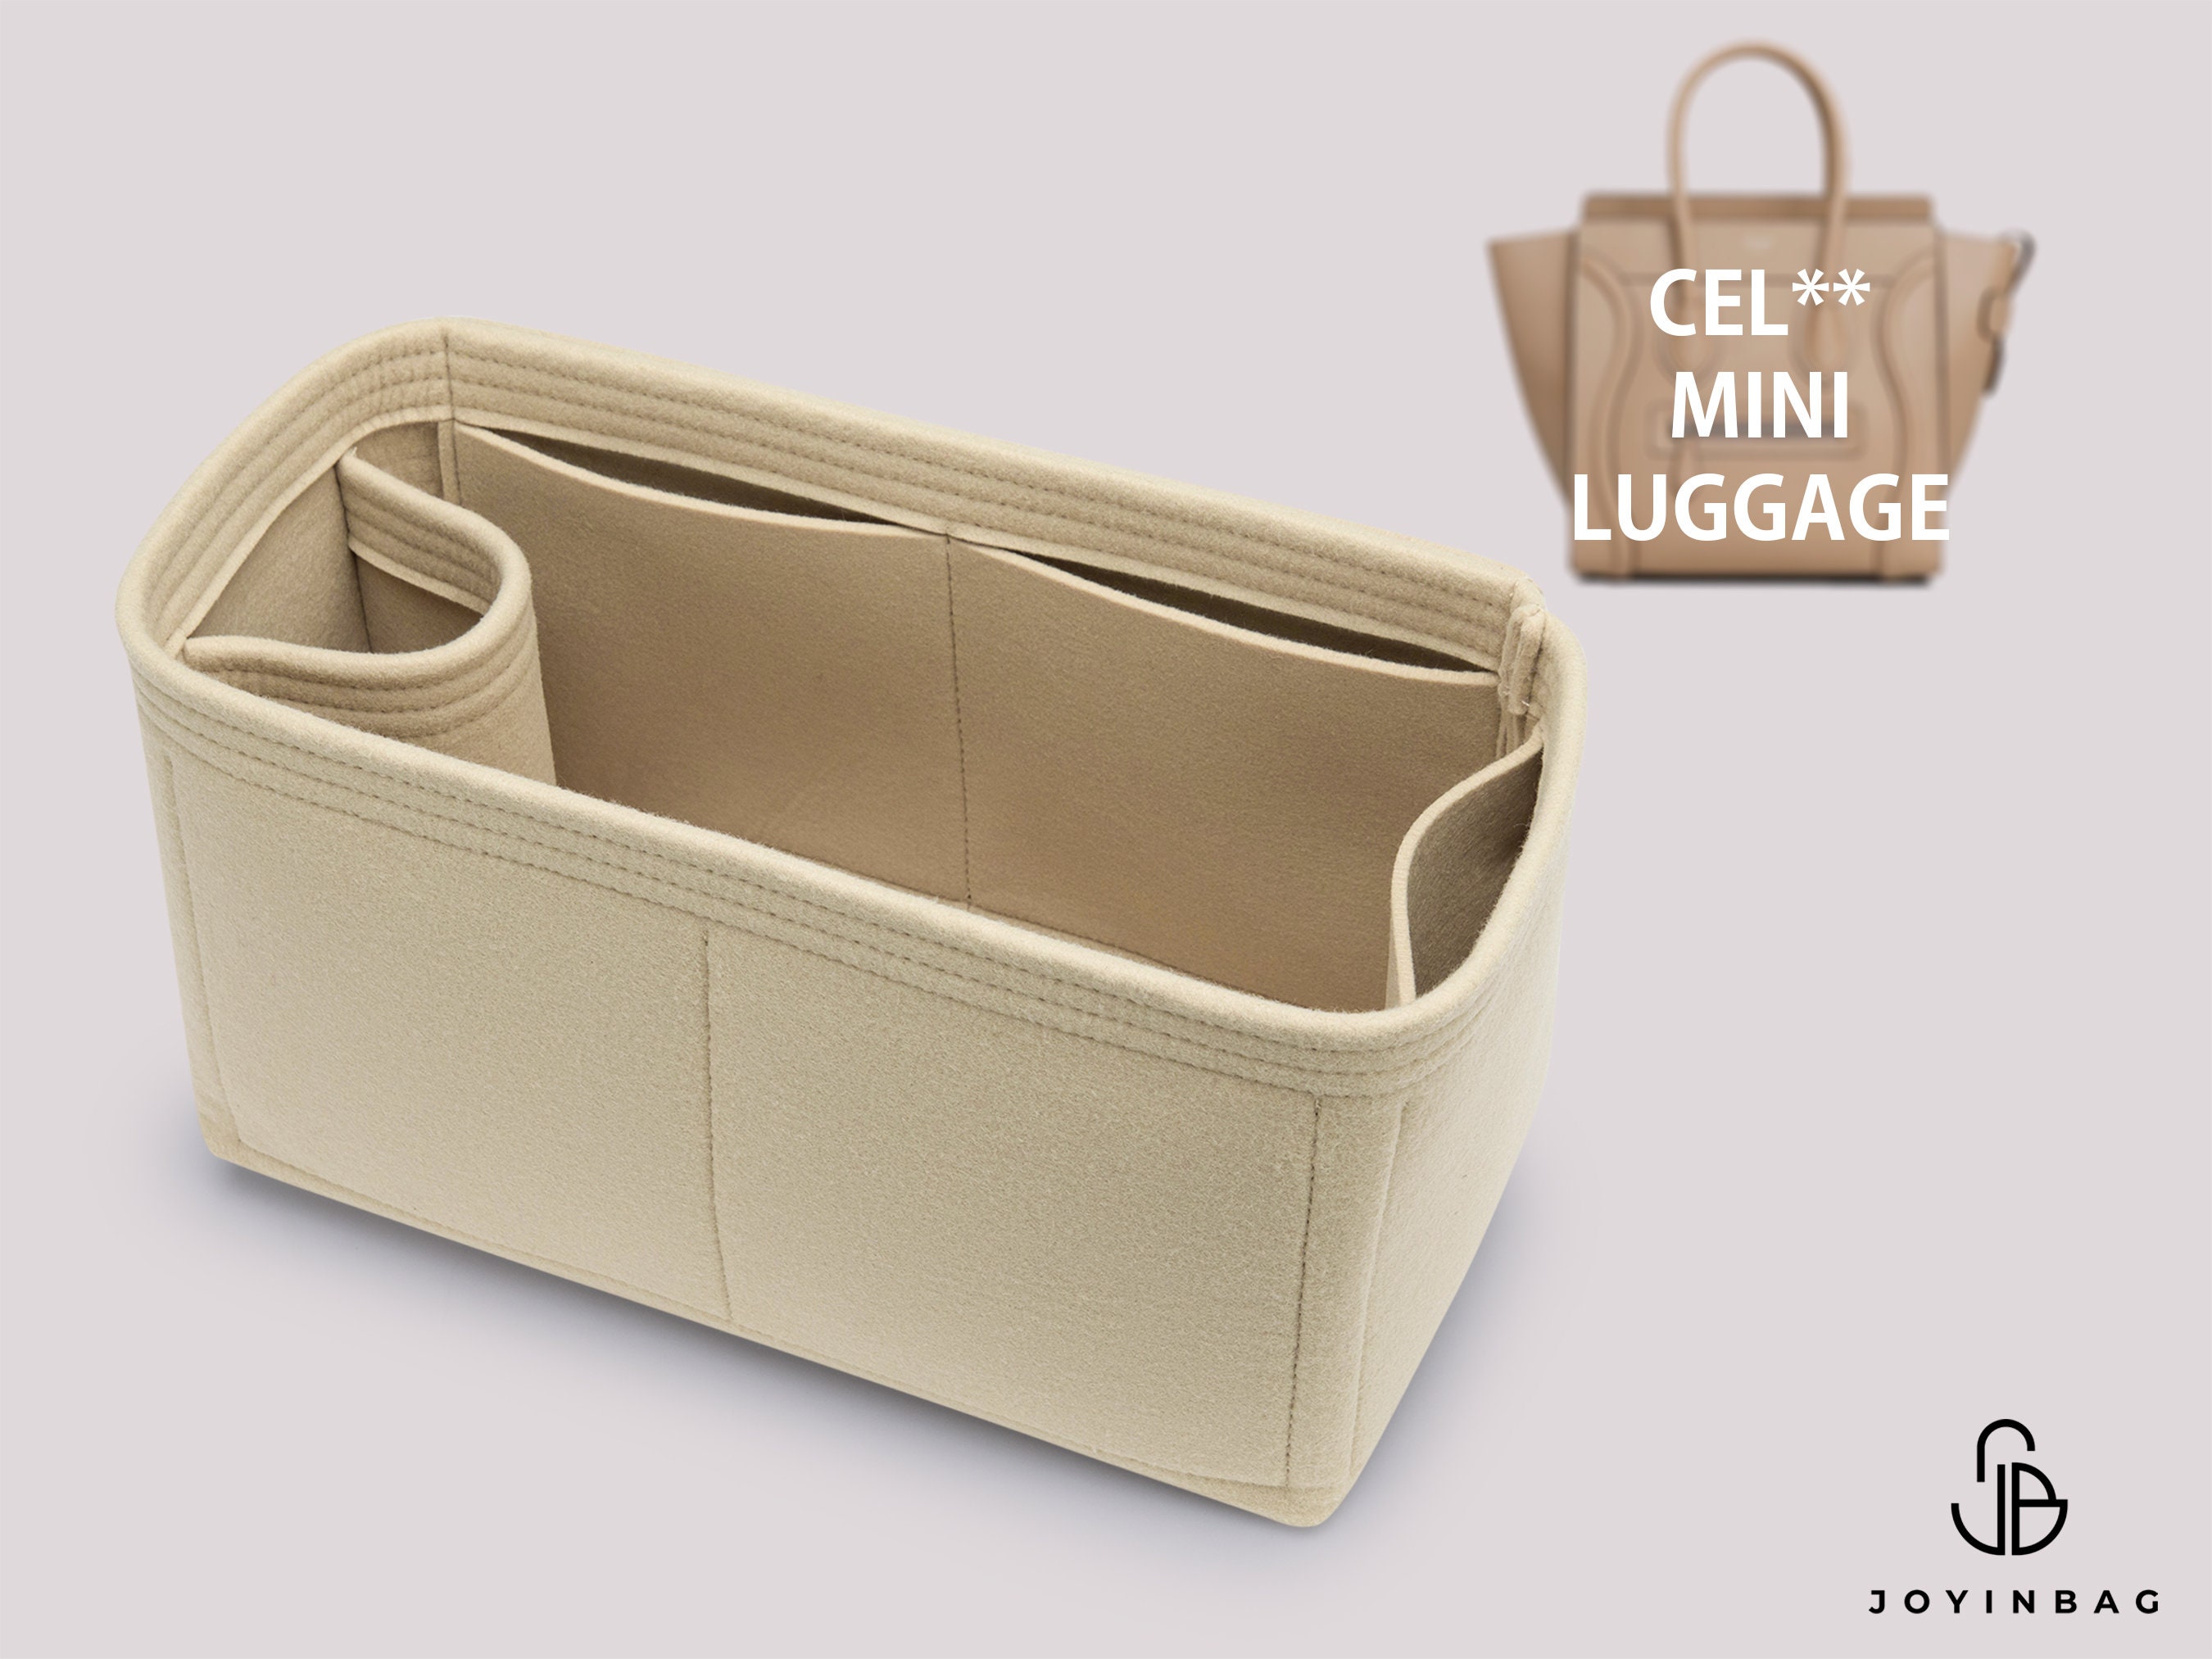 Felt Cloth Storage Organizer Insert Bag Liner Fit For NOE series